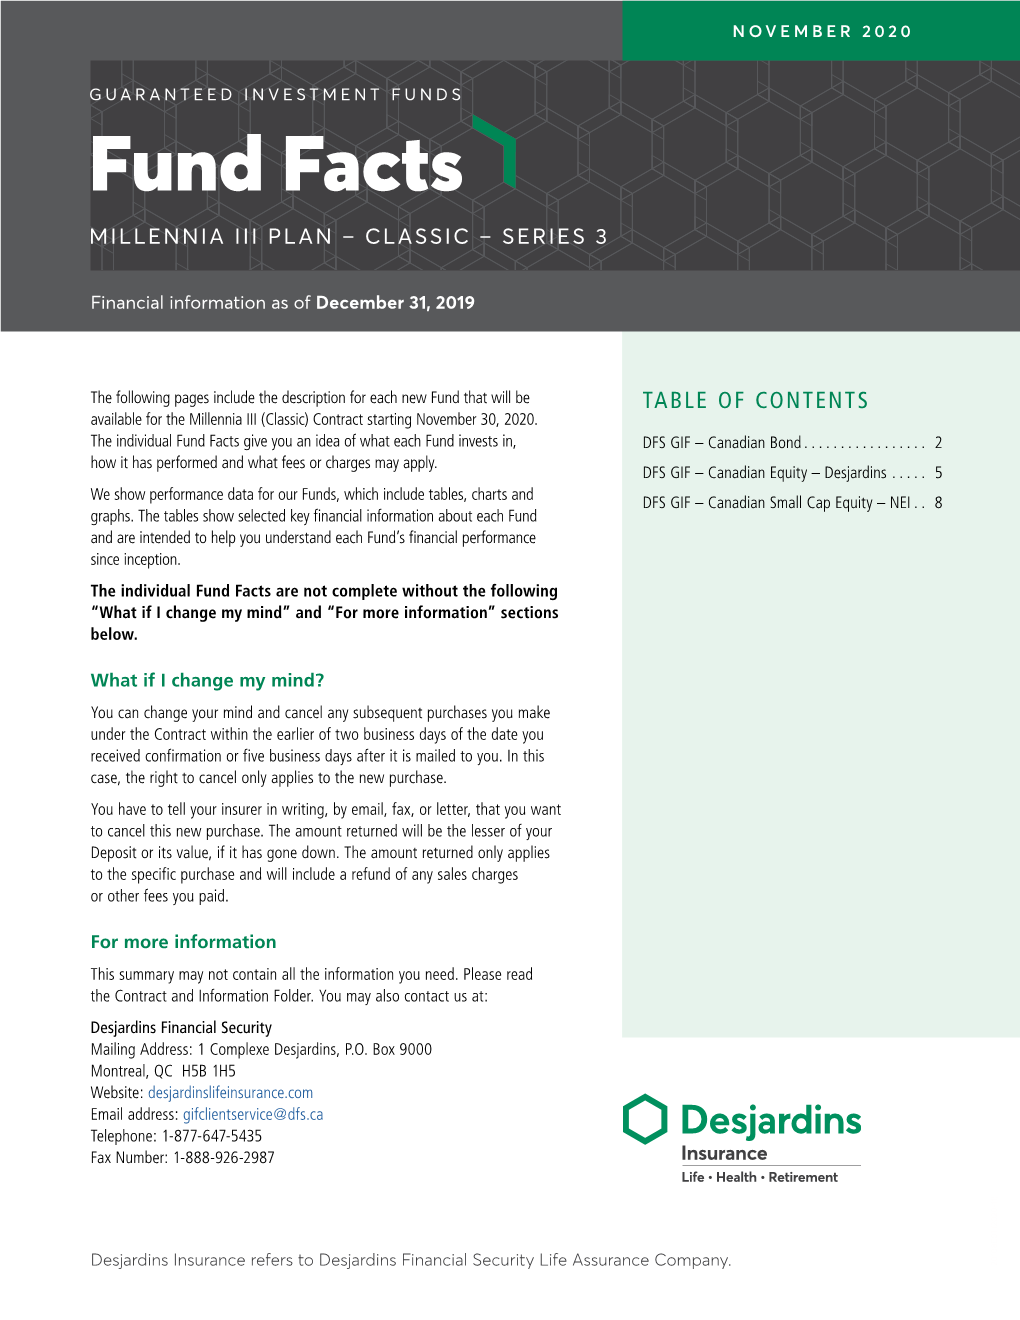 Fund Facts MILLENNIA III PLAN – CLASSIC – SERIES 3